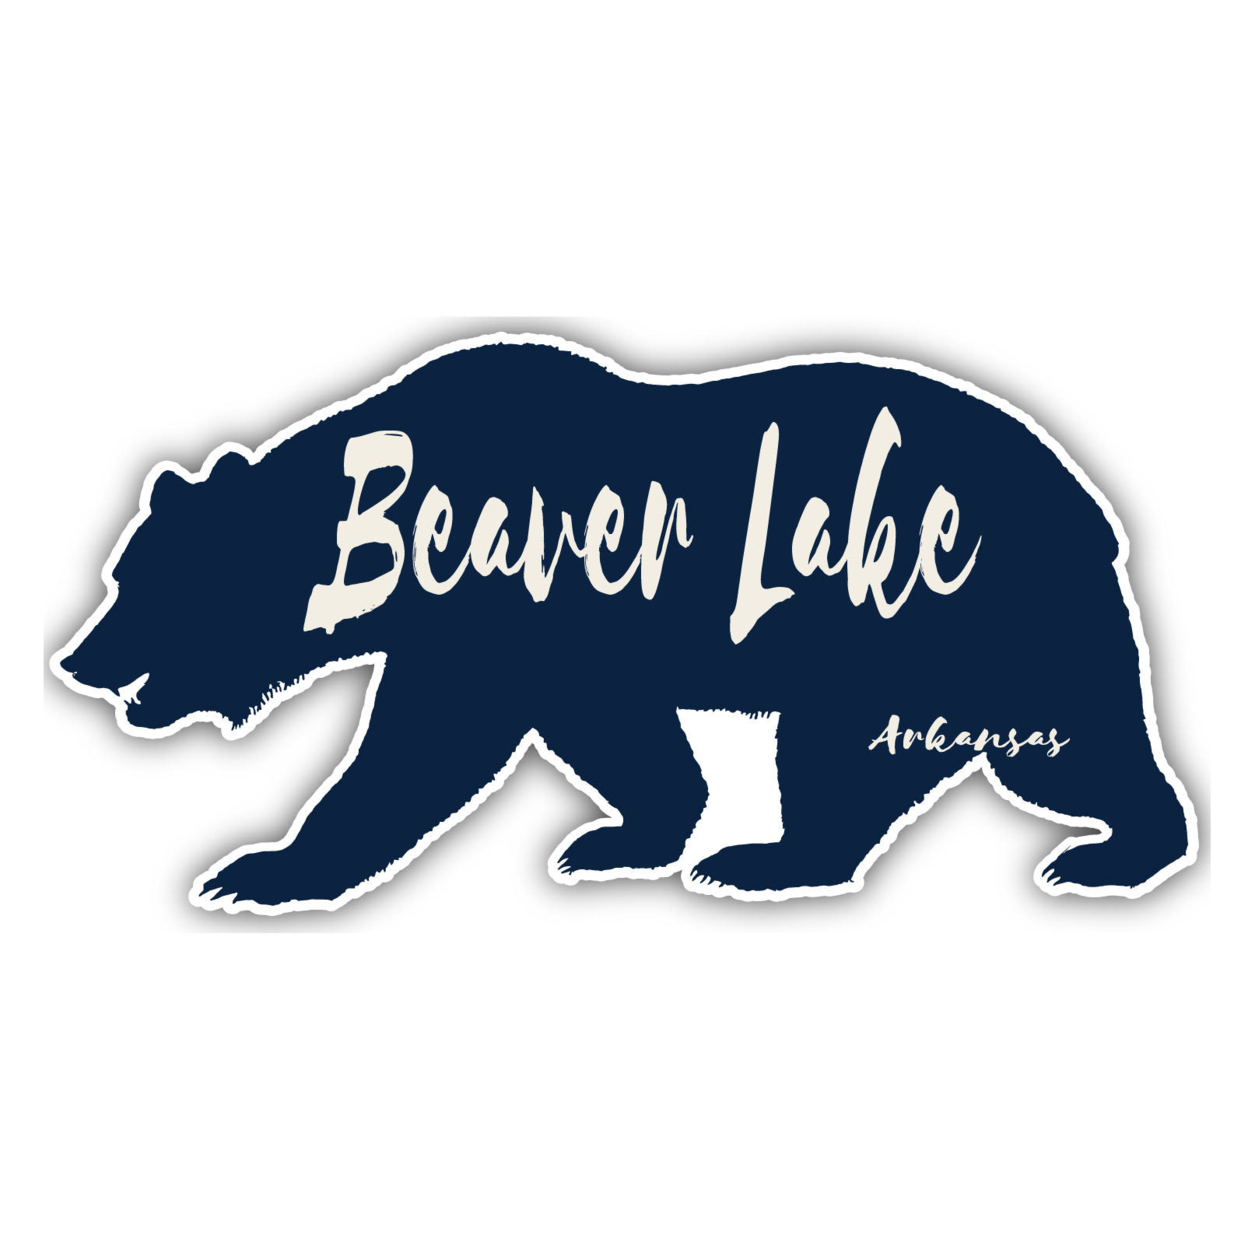 Beaver Lake Arkansas Souvenir Decorative Stickers (Choose Theme And Size) - 4-Pack, 2-Inch, Tent